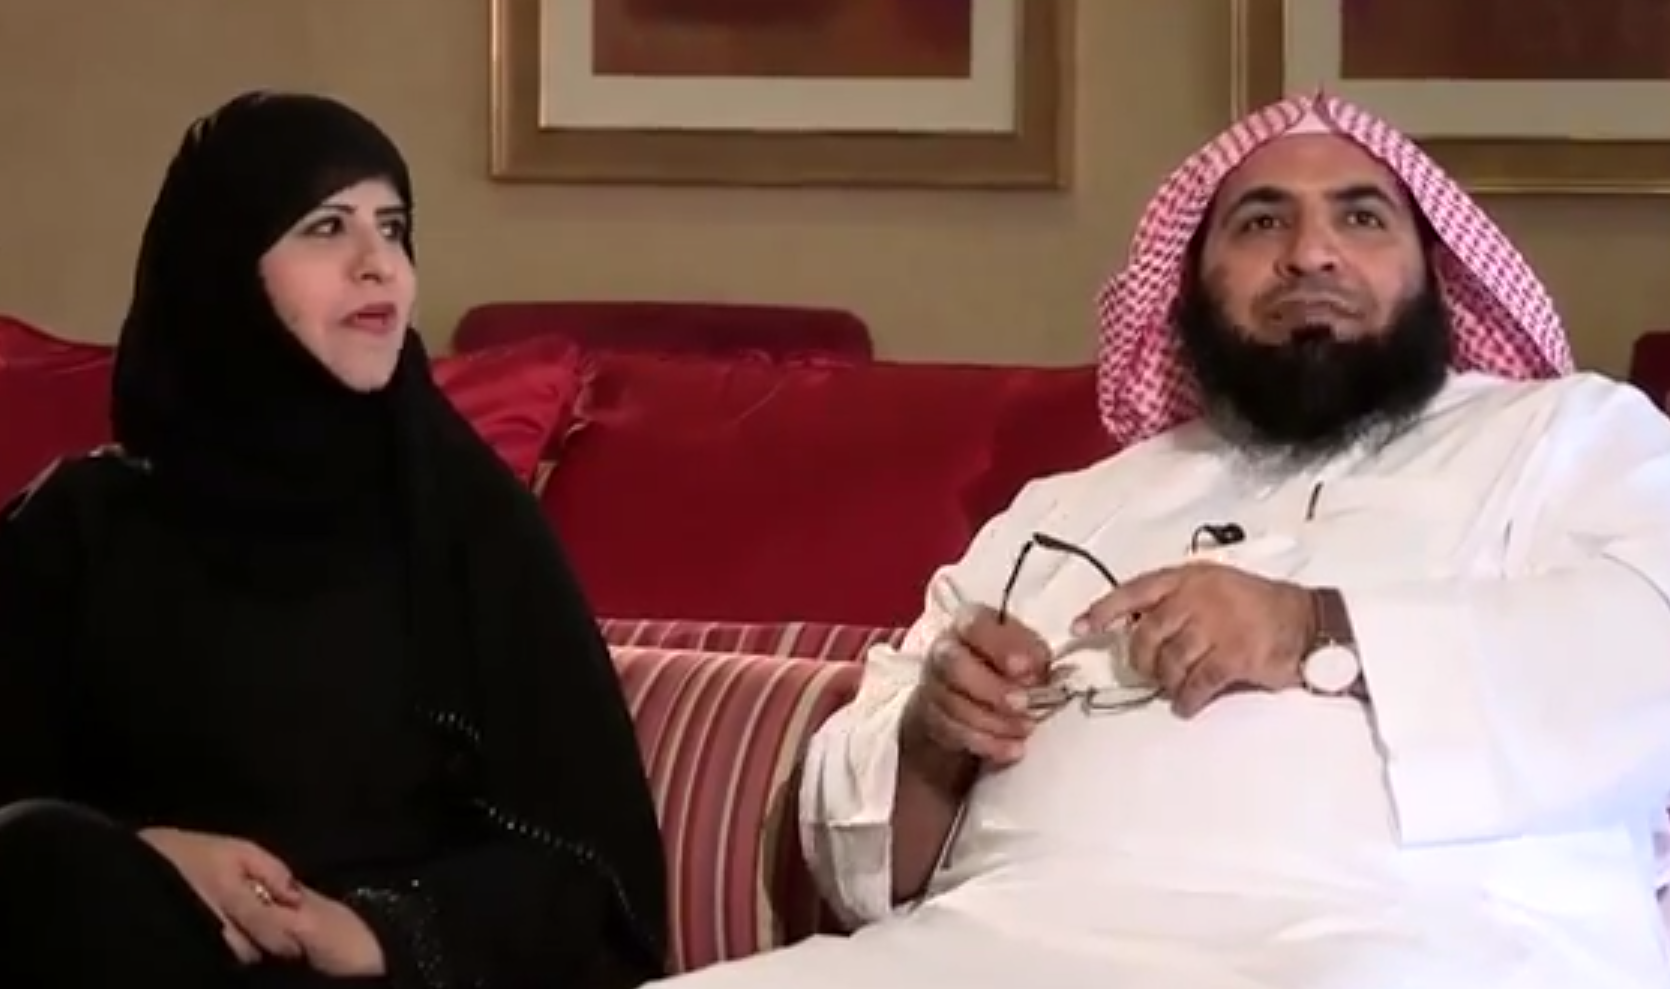 Saudi Arabias Sheikh Ahmad AlGhamdi Brings Unveiled Wife Onto TV To